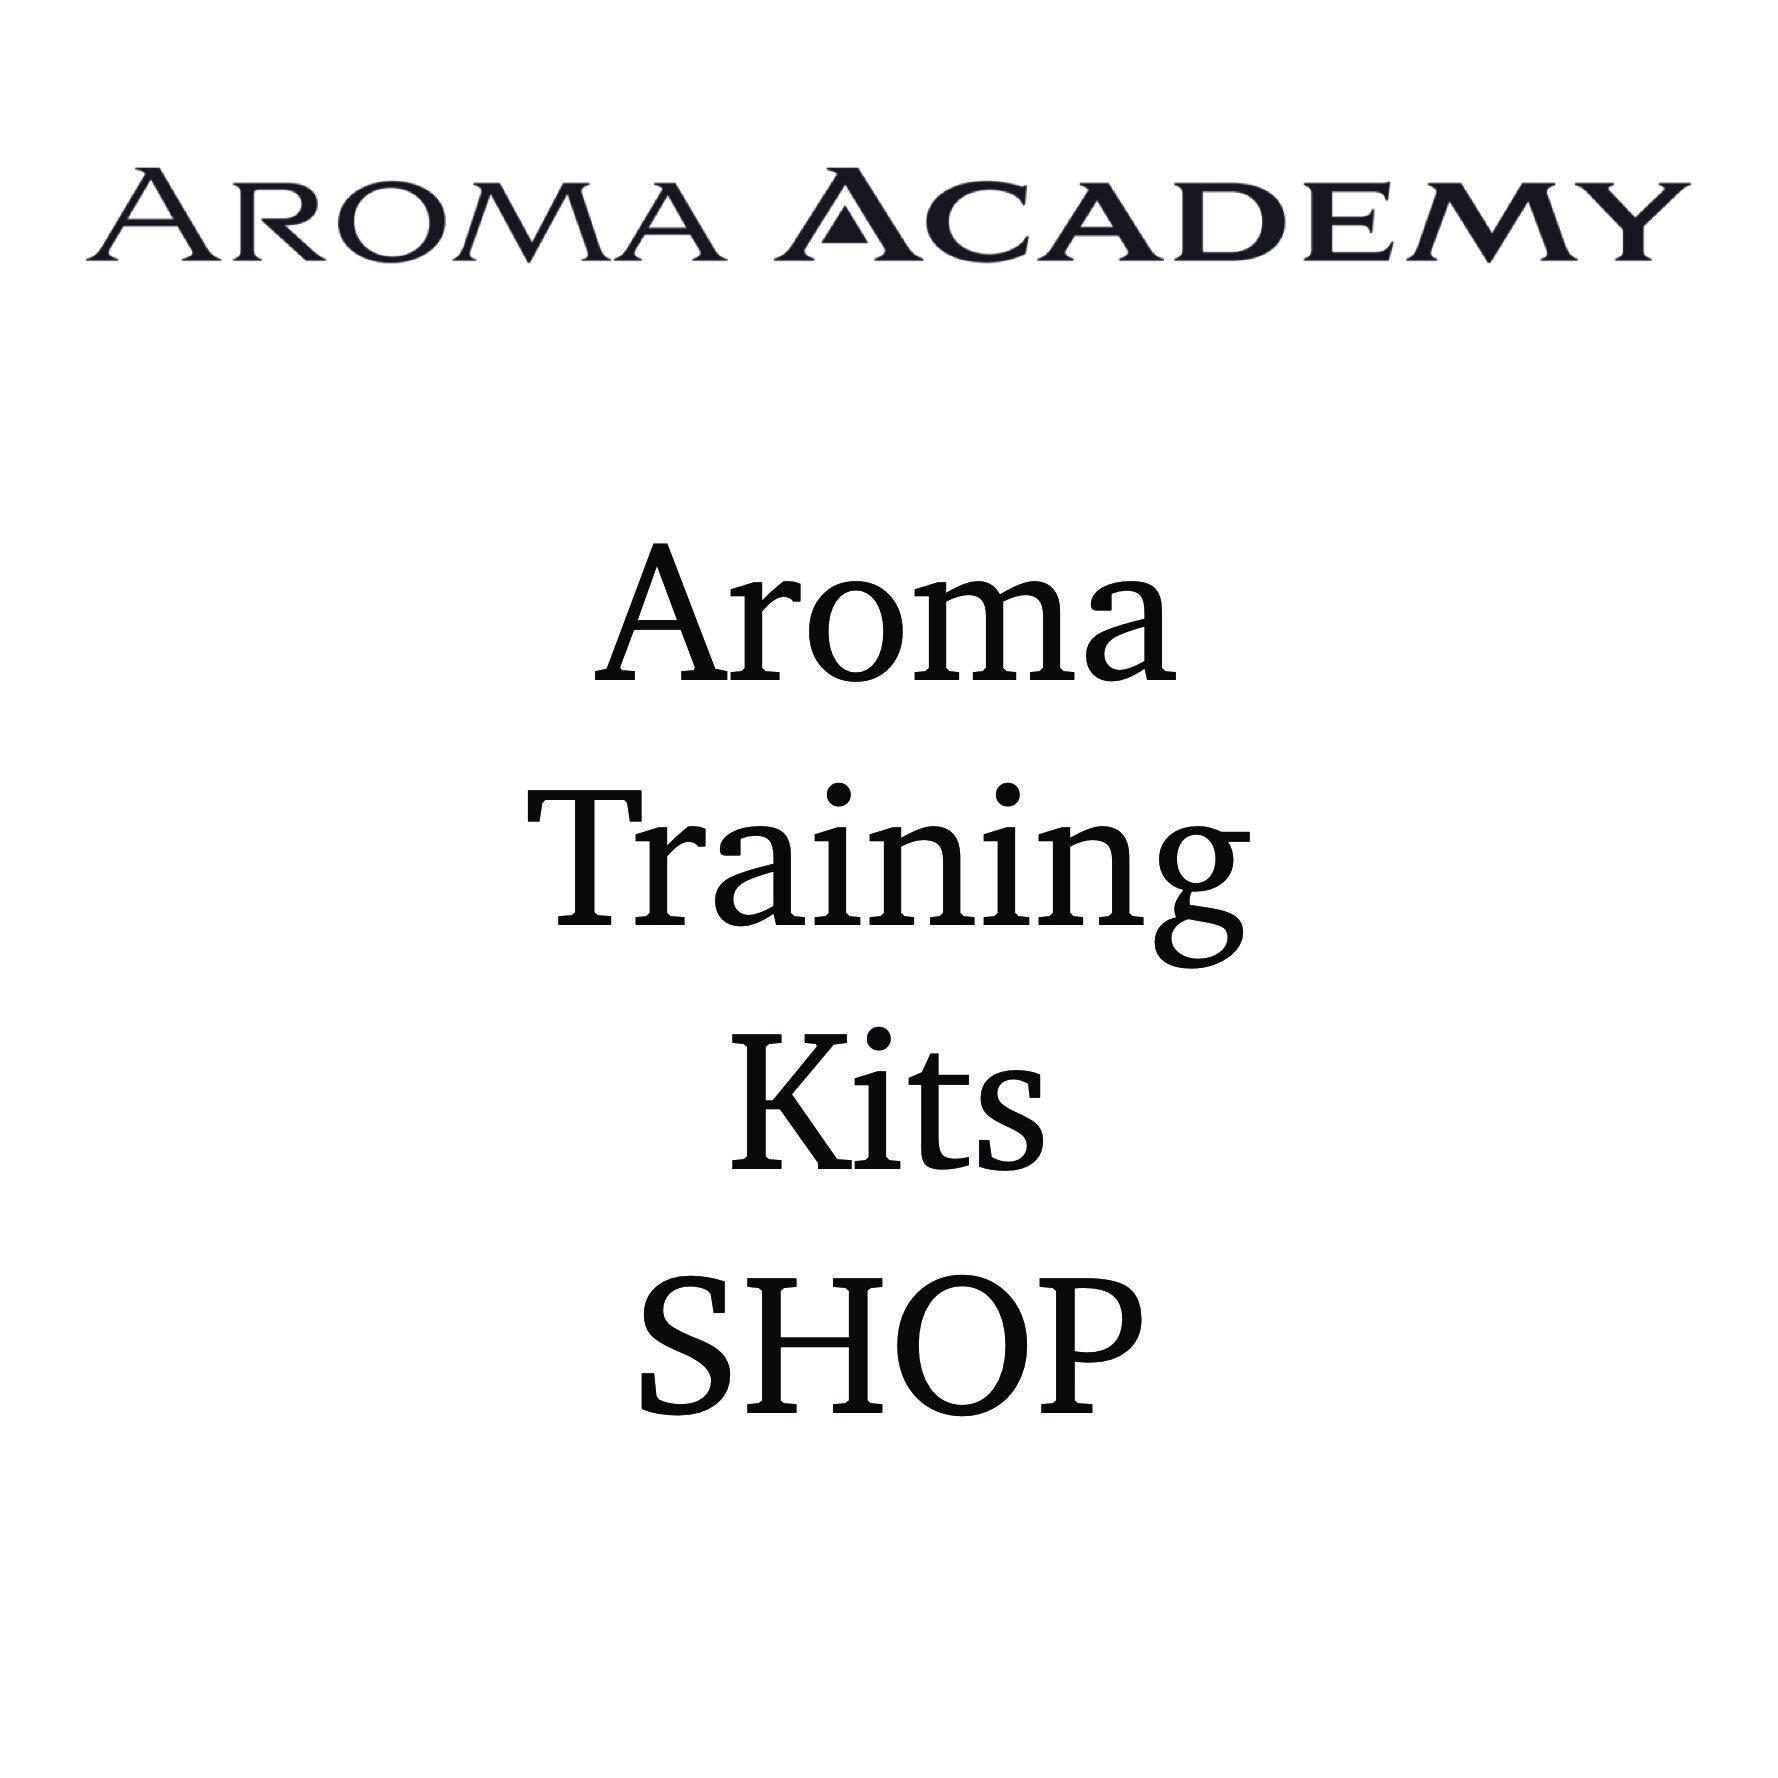 Aroma training kits shop